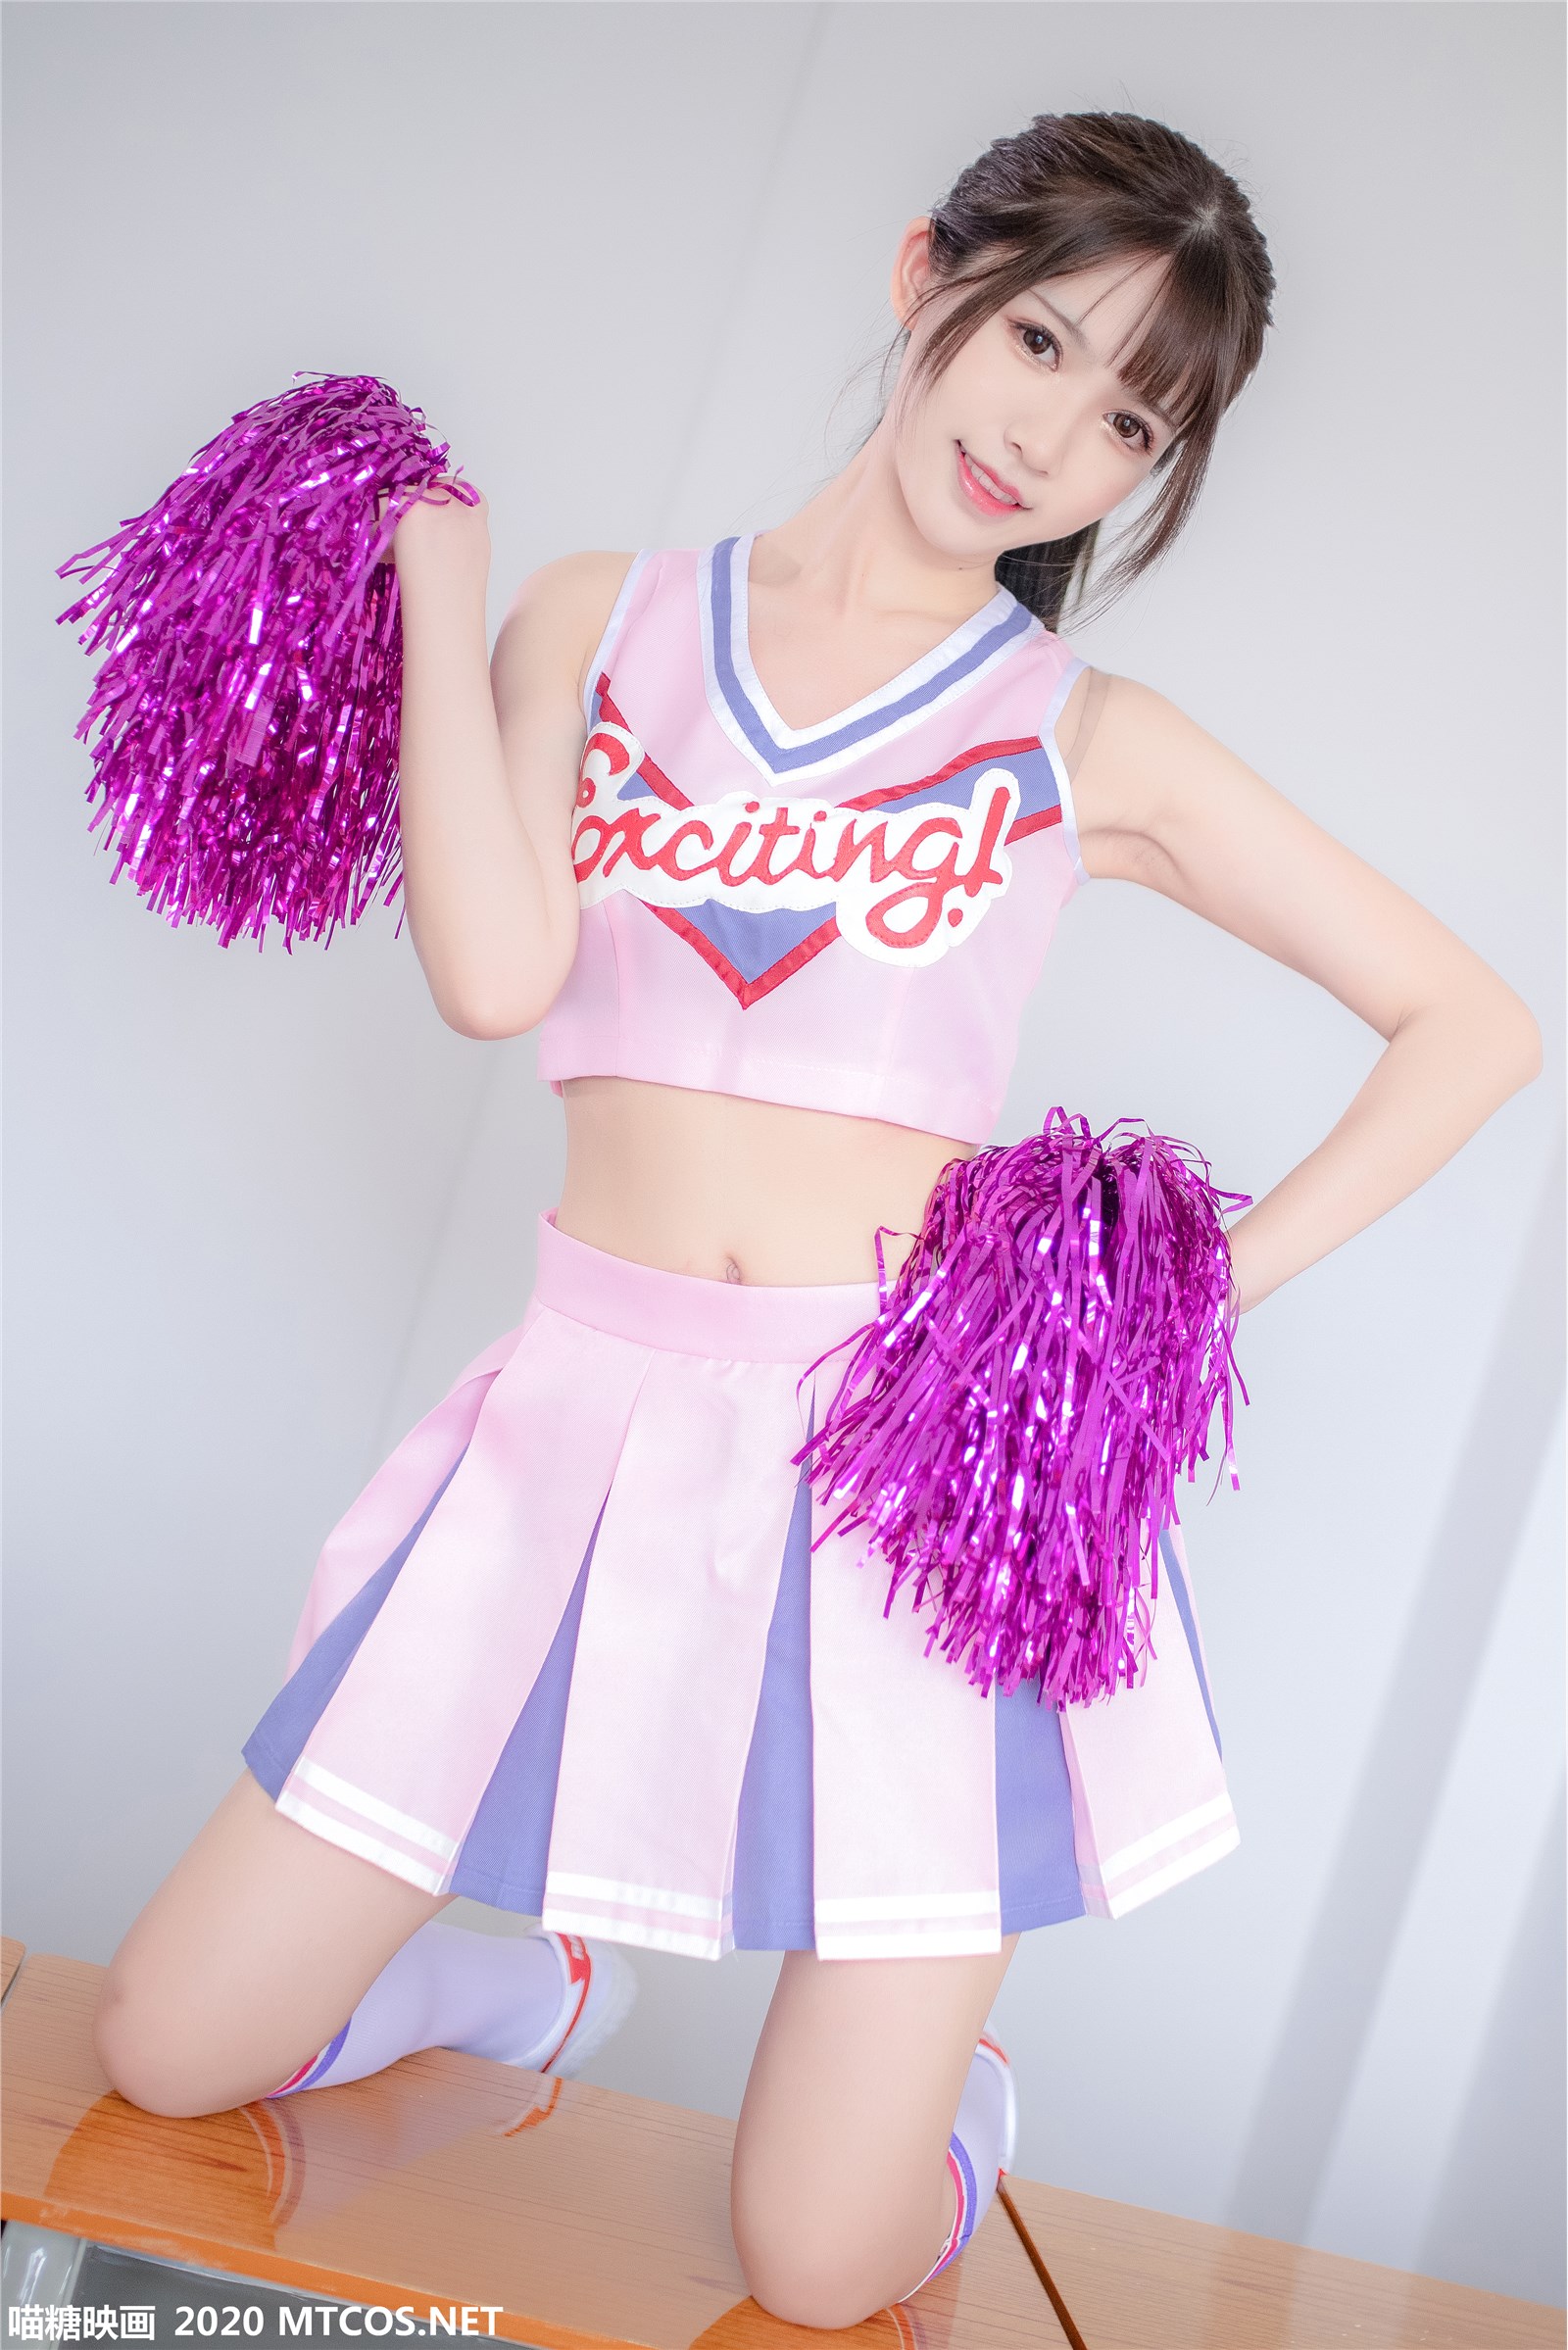 The dress of Cheerleading girl(4)